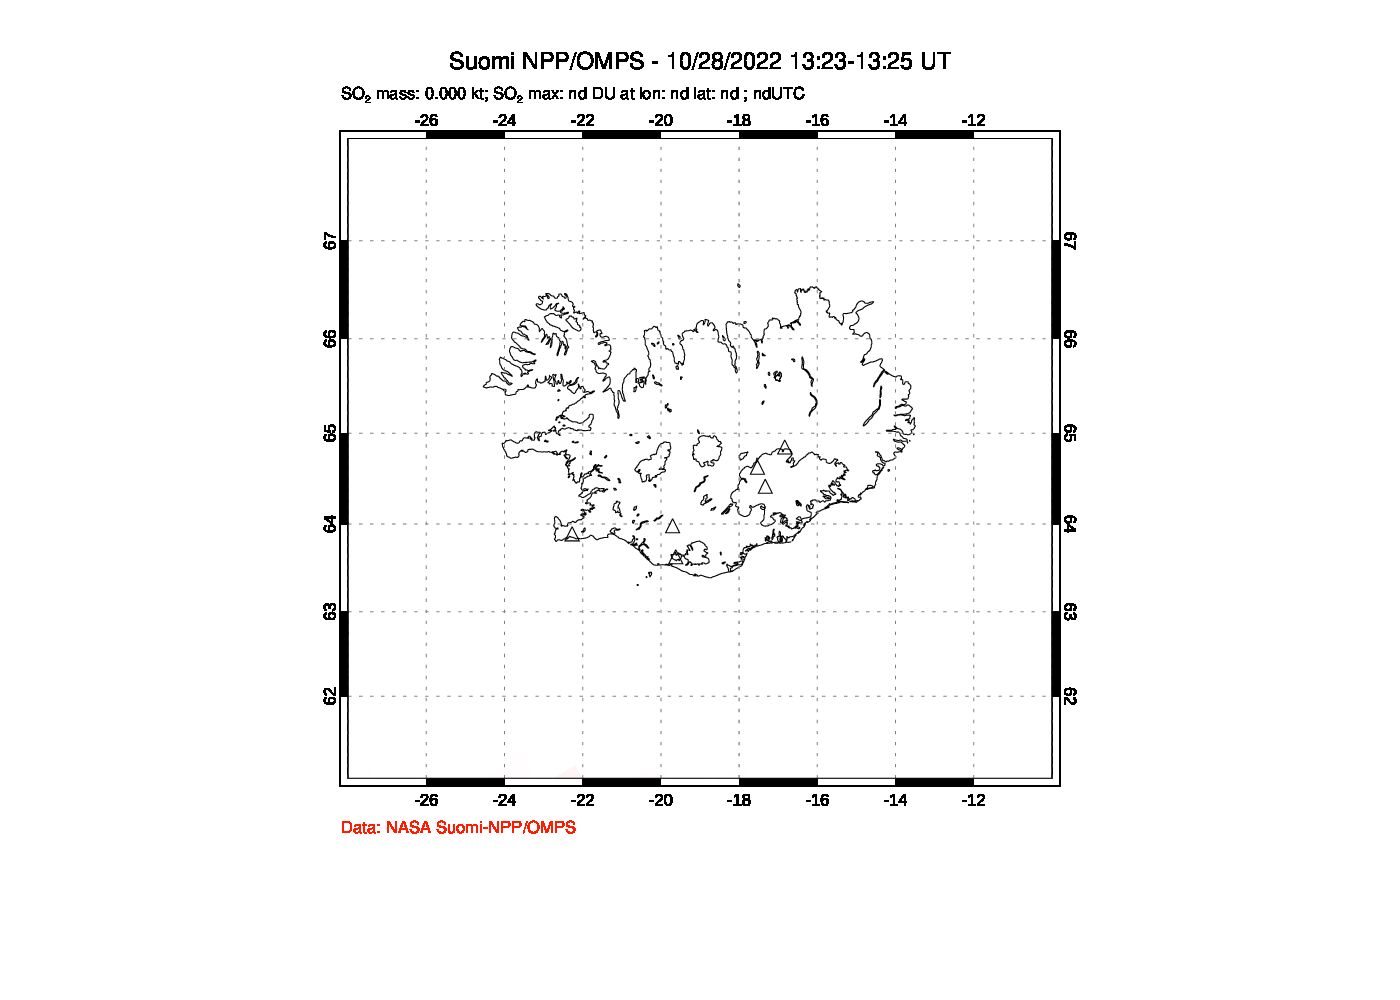 A sulfur dioxide image over Iceland on Oct 28, 2022.